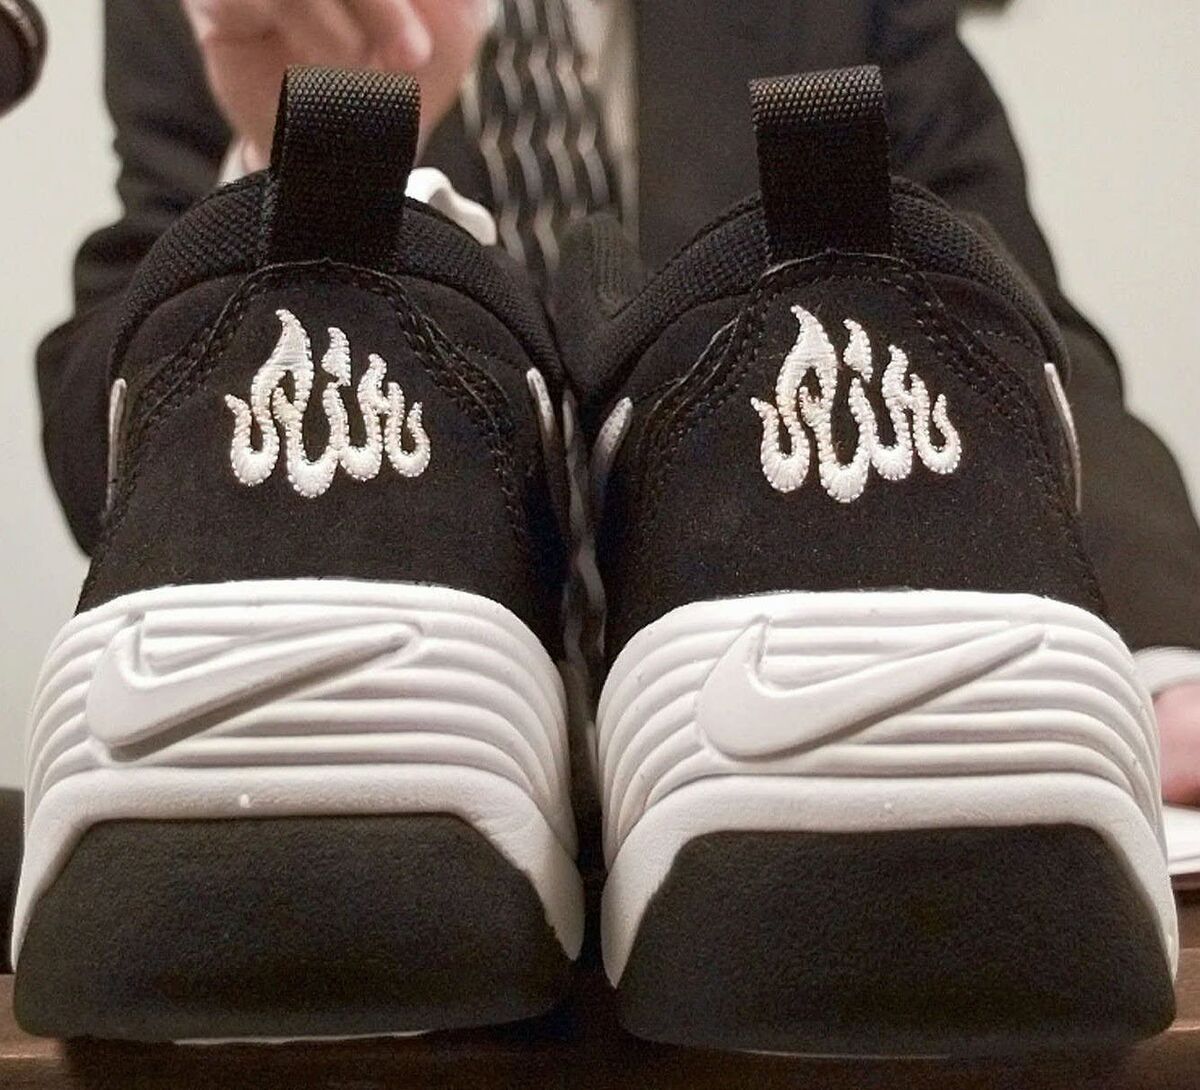 Надписи на подошве. Nike 1997. Nike Air bakin Allah. Кроссовки с иероглифом. Кроссовки для мусульман.